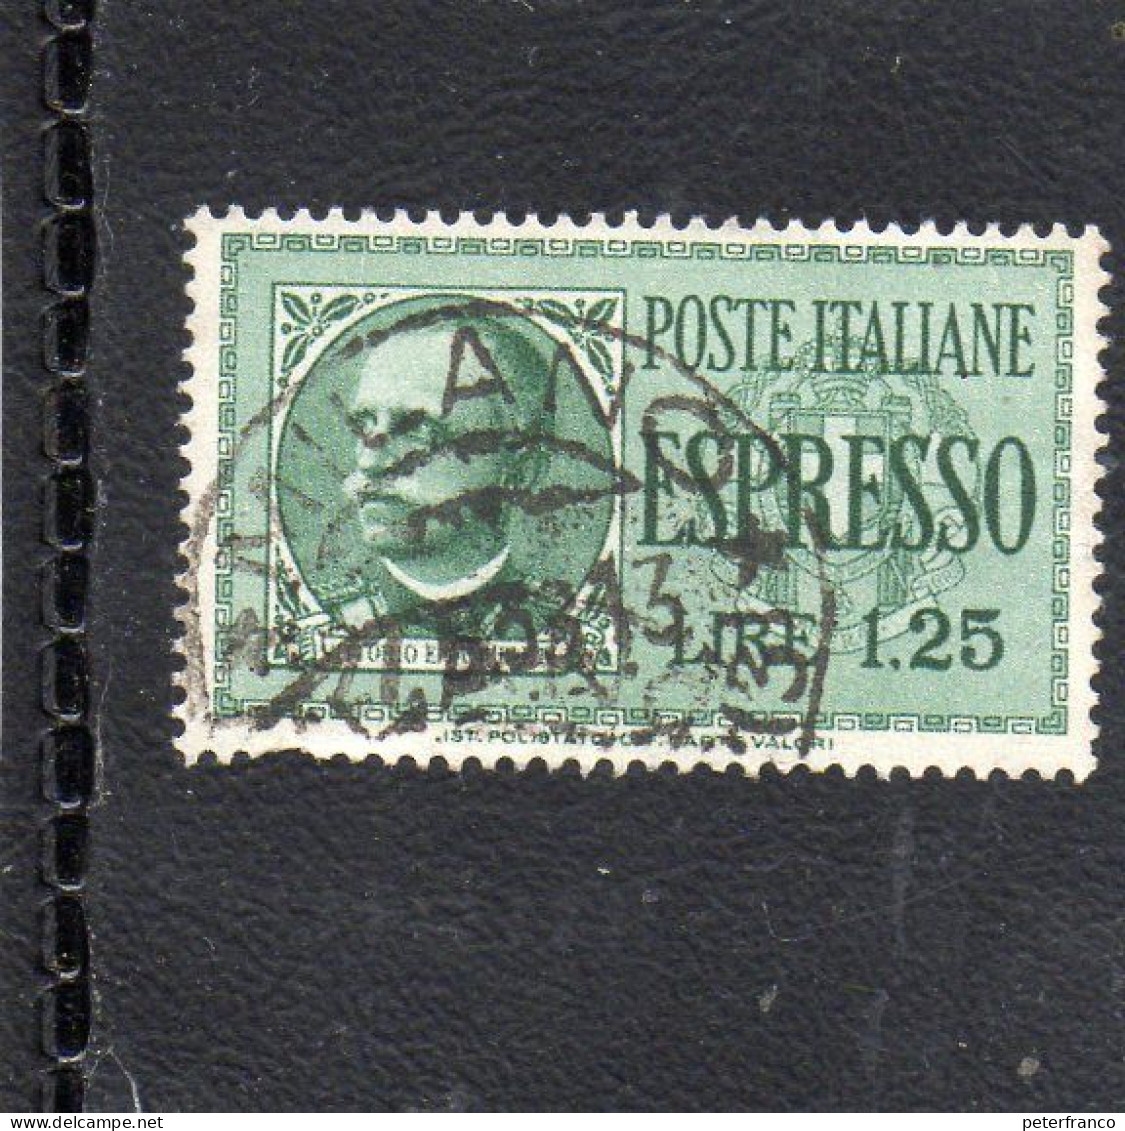 1932 Italia - Espresso - Eilsendung (Eilpost)